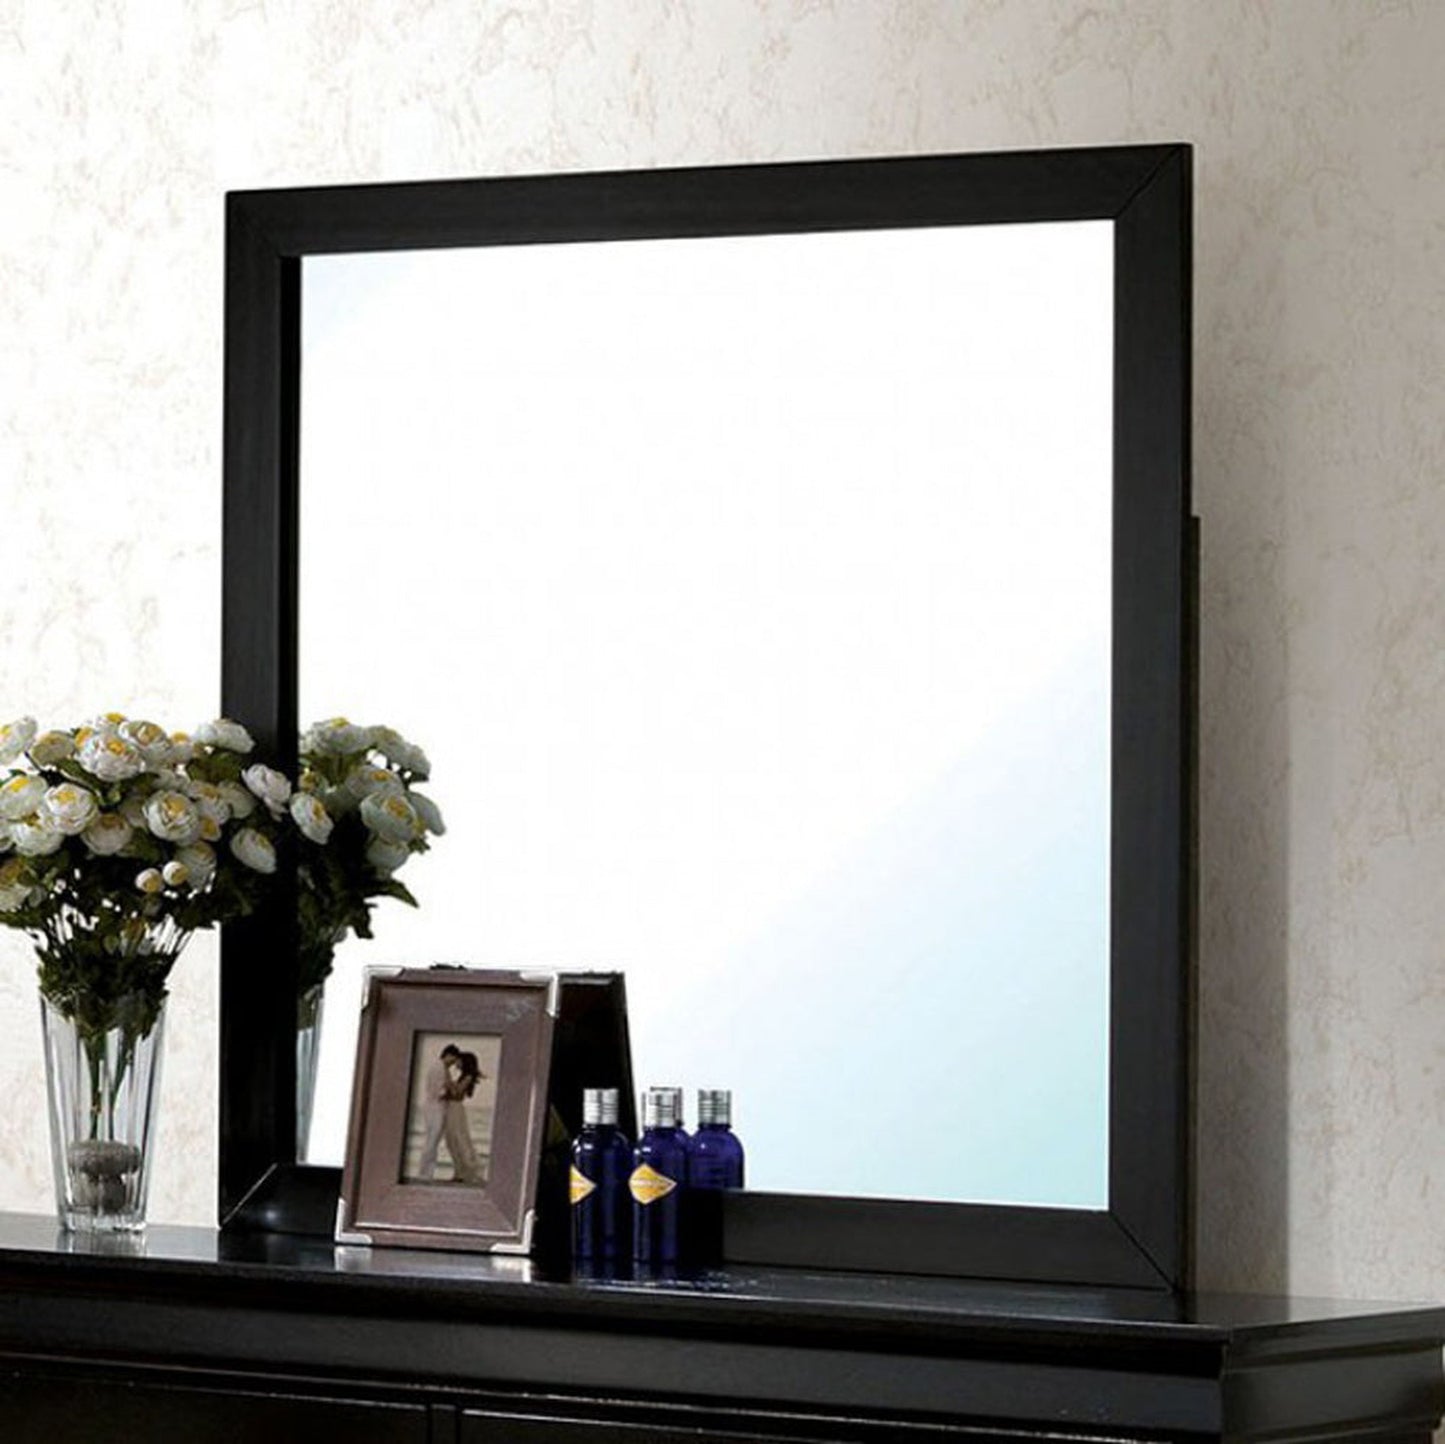 Benzara 43" Black Rectangular Wooden Framed Wall Mirror With Mounting Hardware